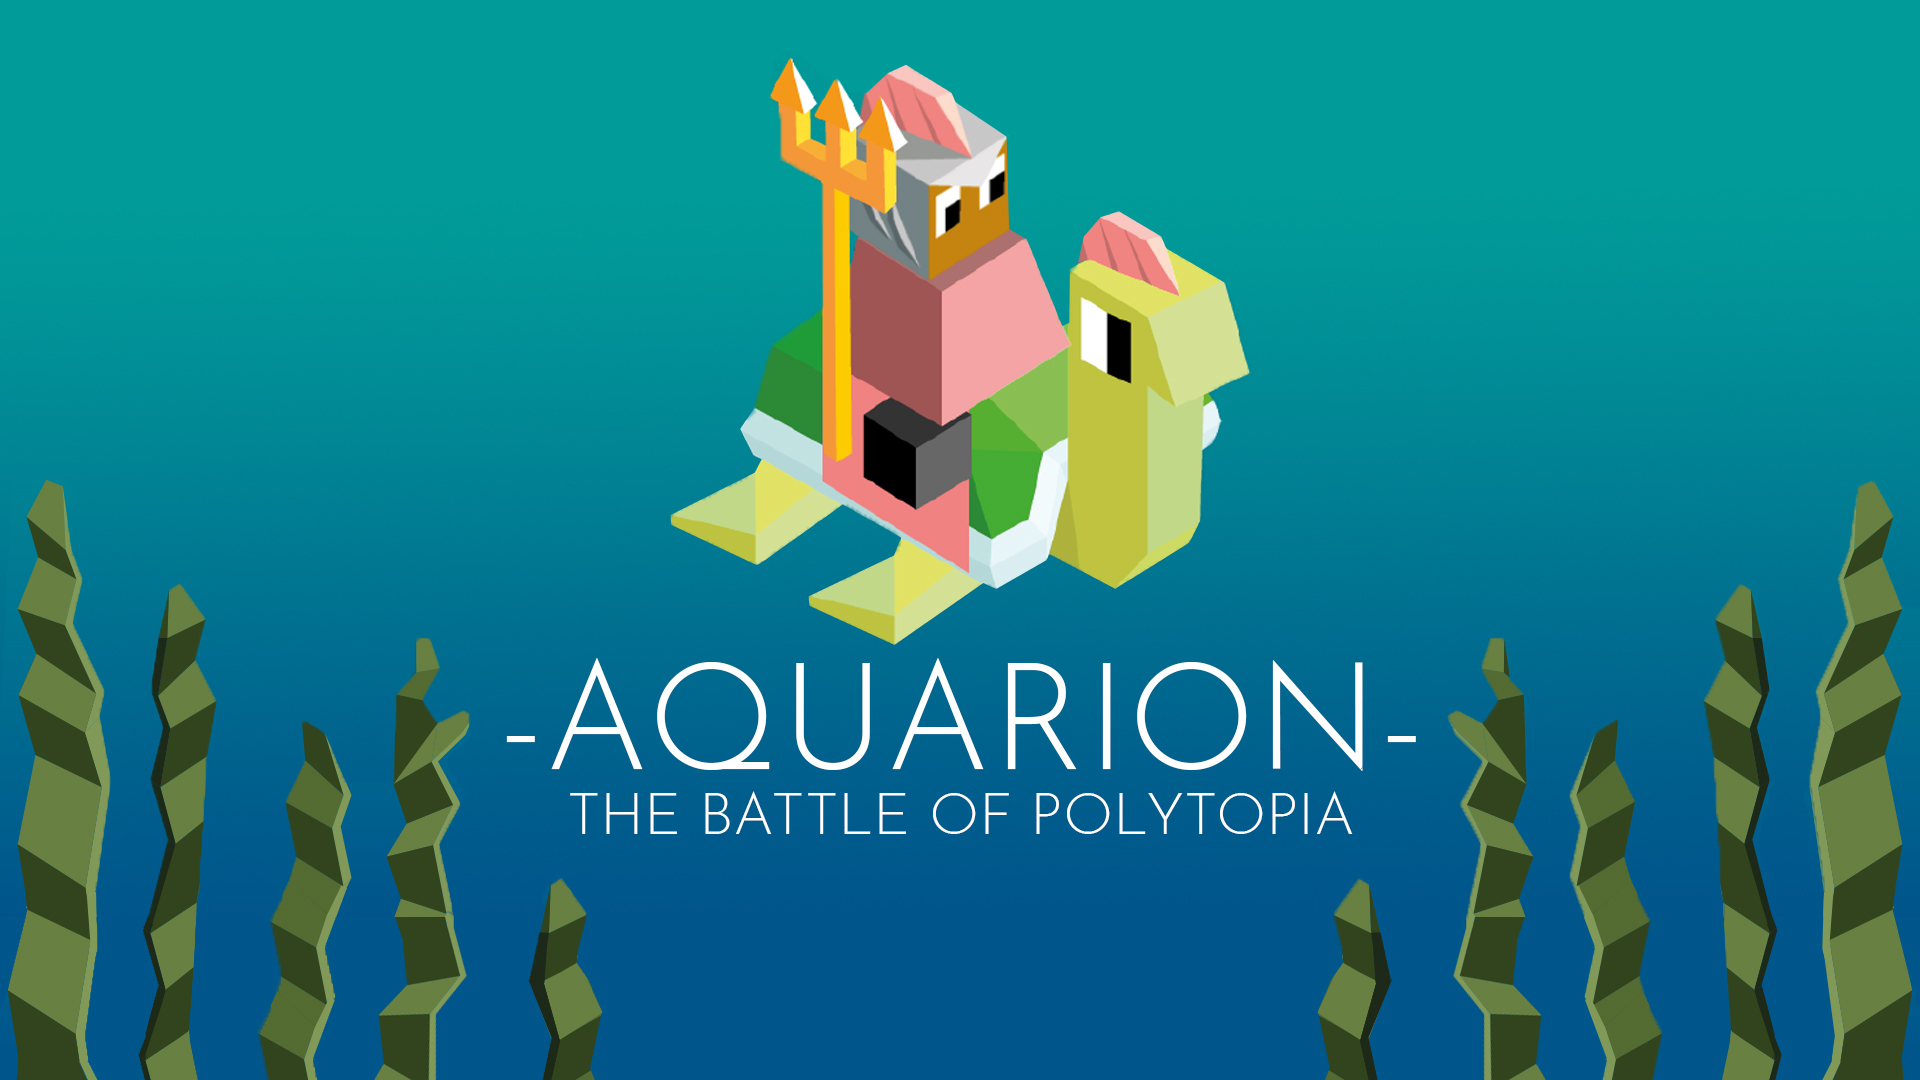 The Battle of Polytopia: Aquarion